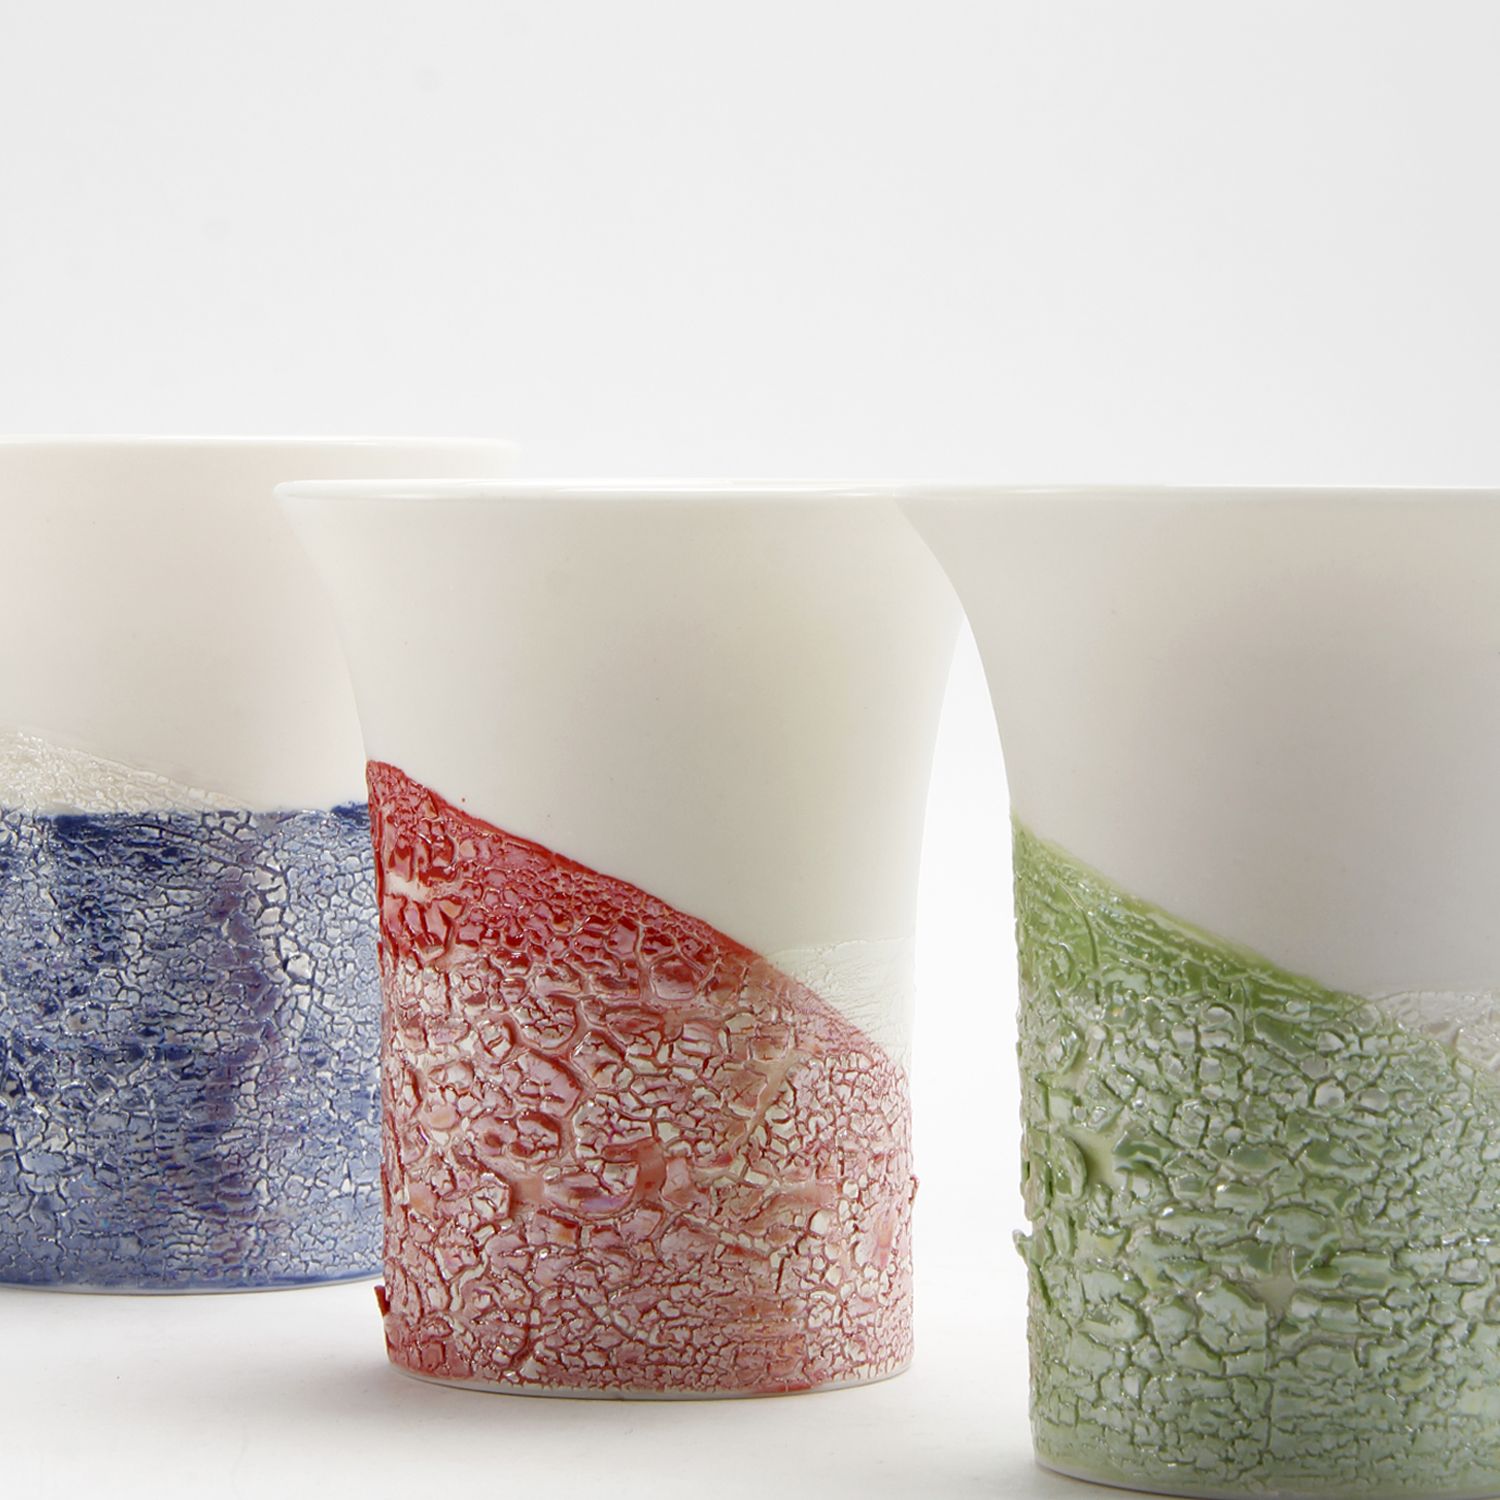 Cuir Ceramics: Cup/Vase Product Image 2 of 4